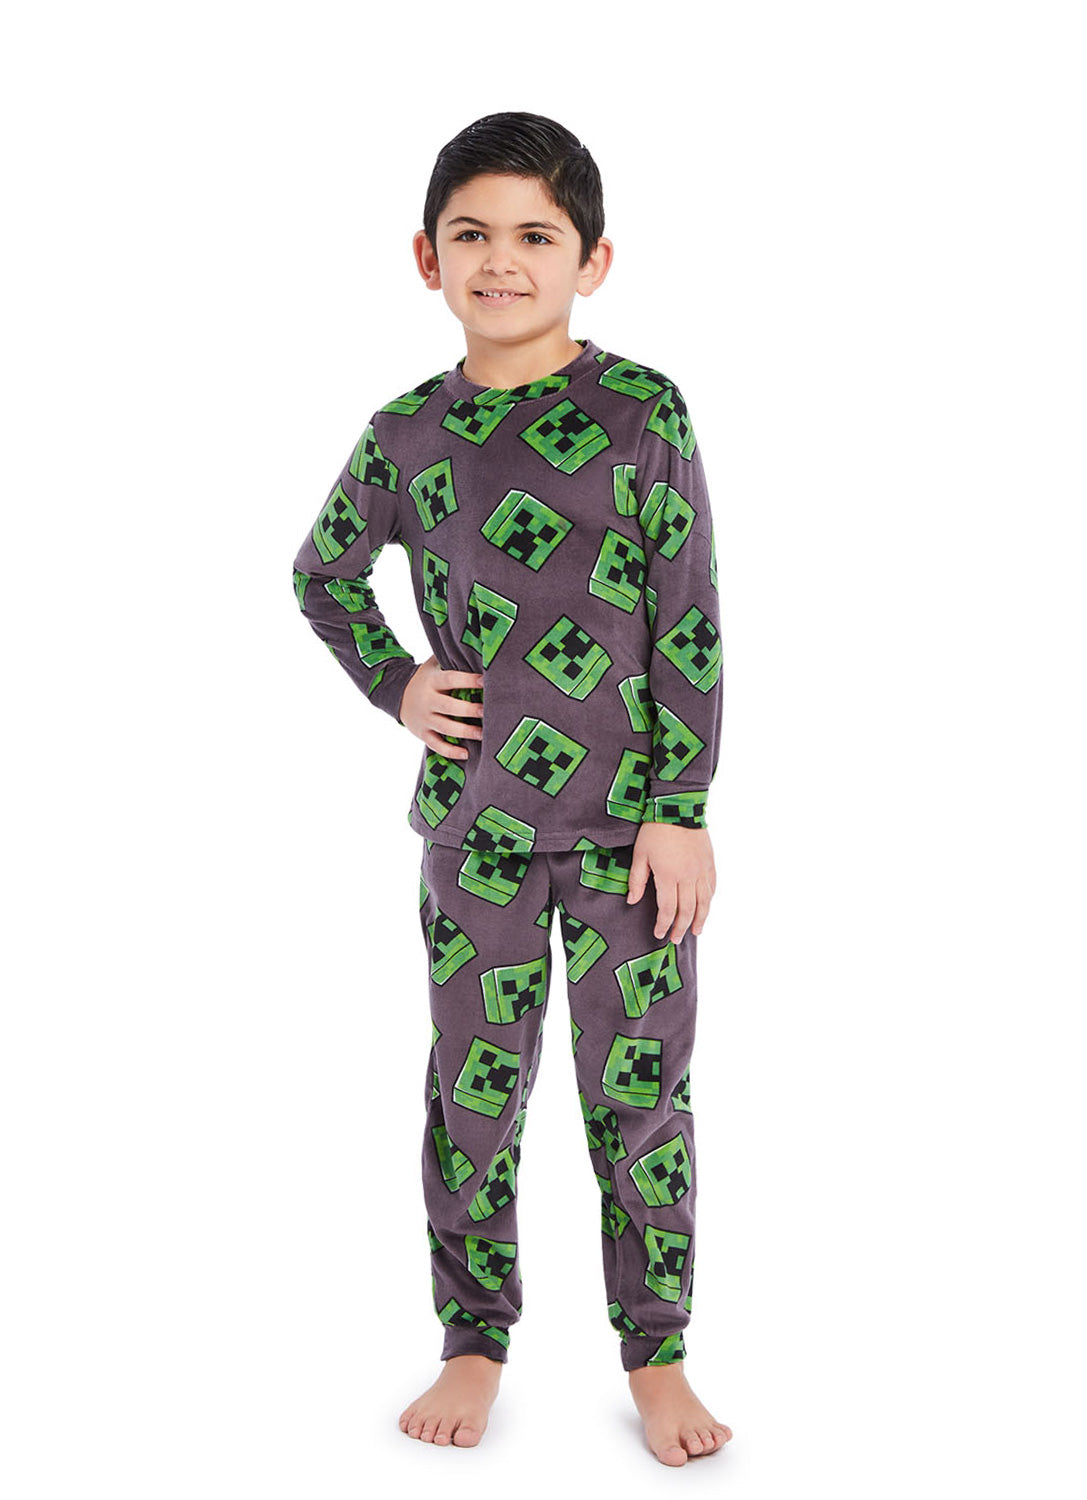 Boy wearing Minecraft PJ set 2 pieces, long sleeve shirt and pants (gray & green)